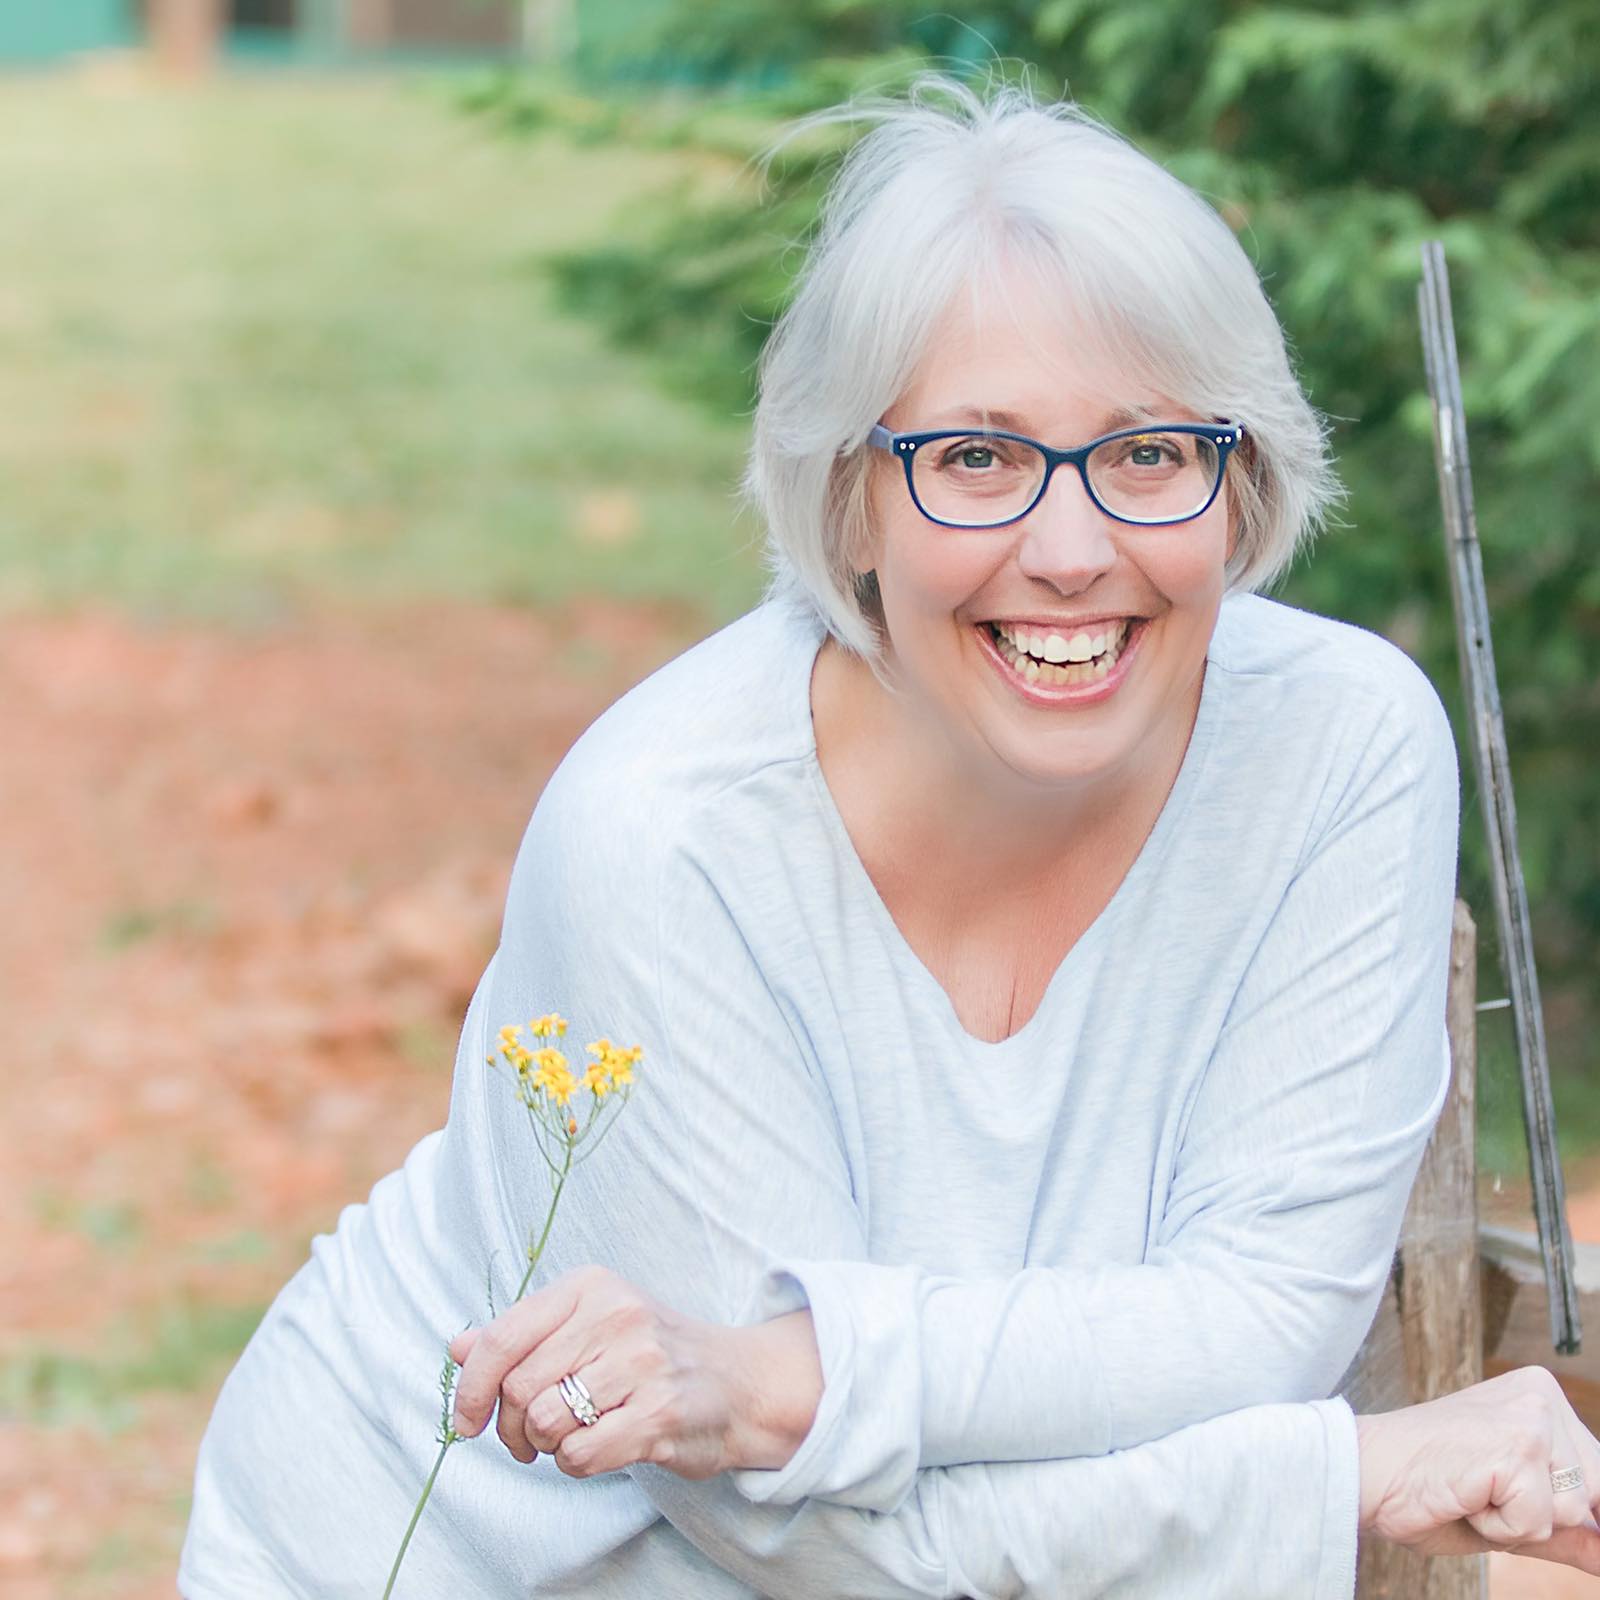 Psoriatic Arthritis Community Advocate Julie Greenwood